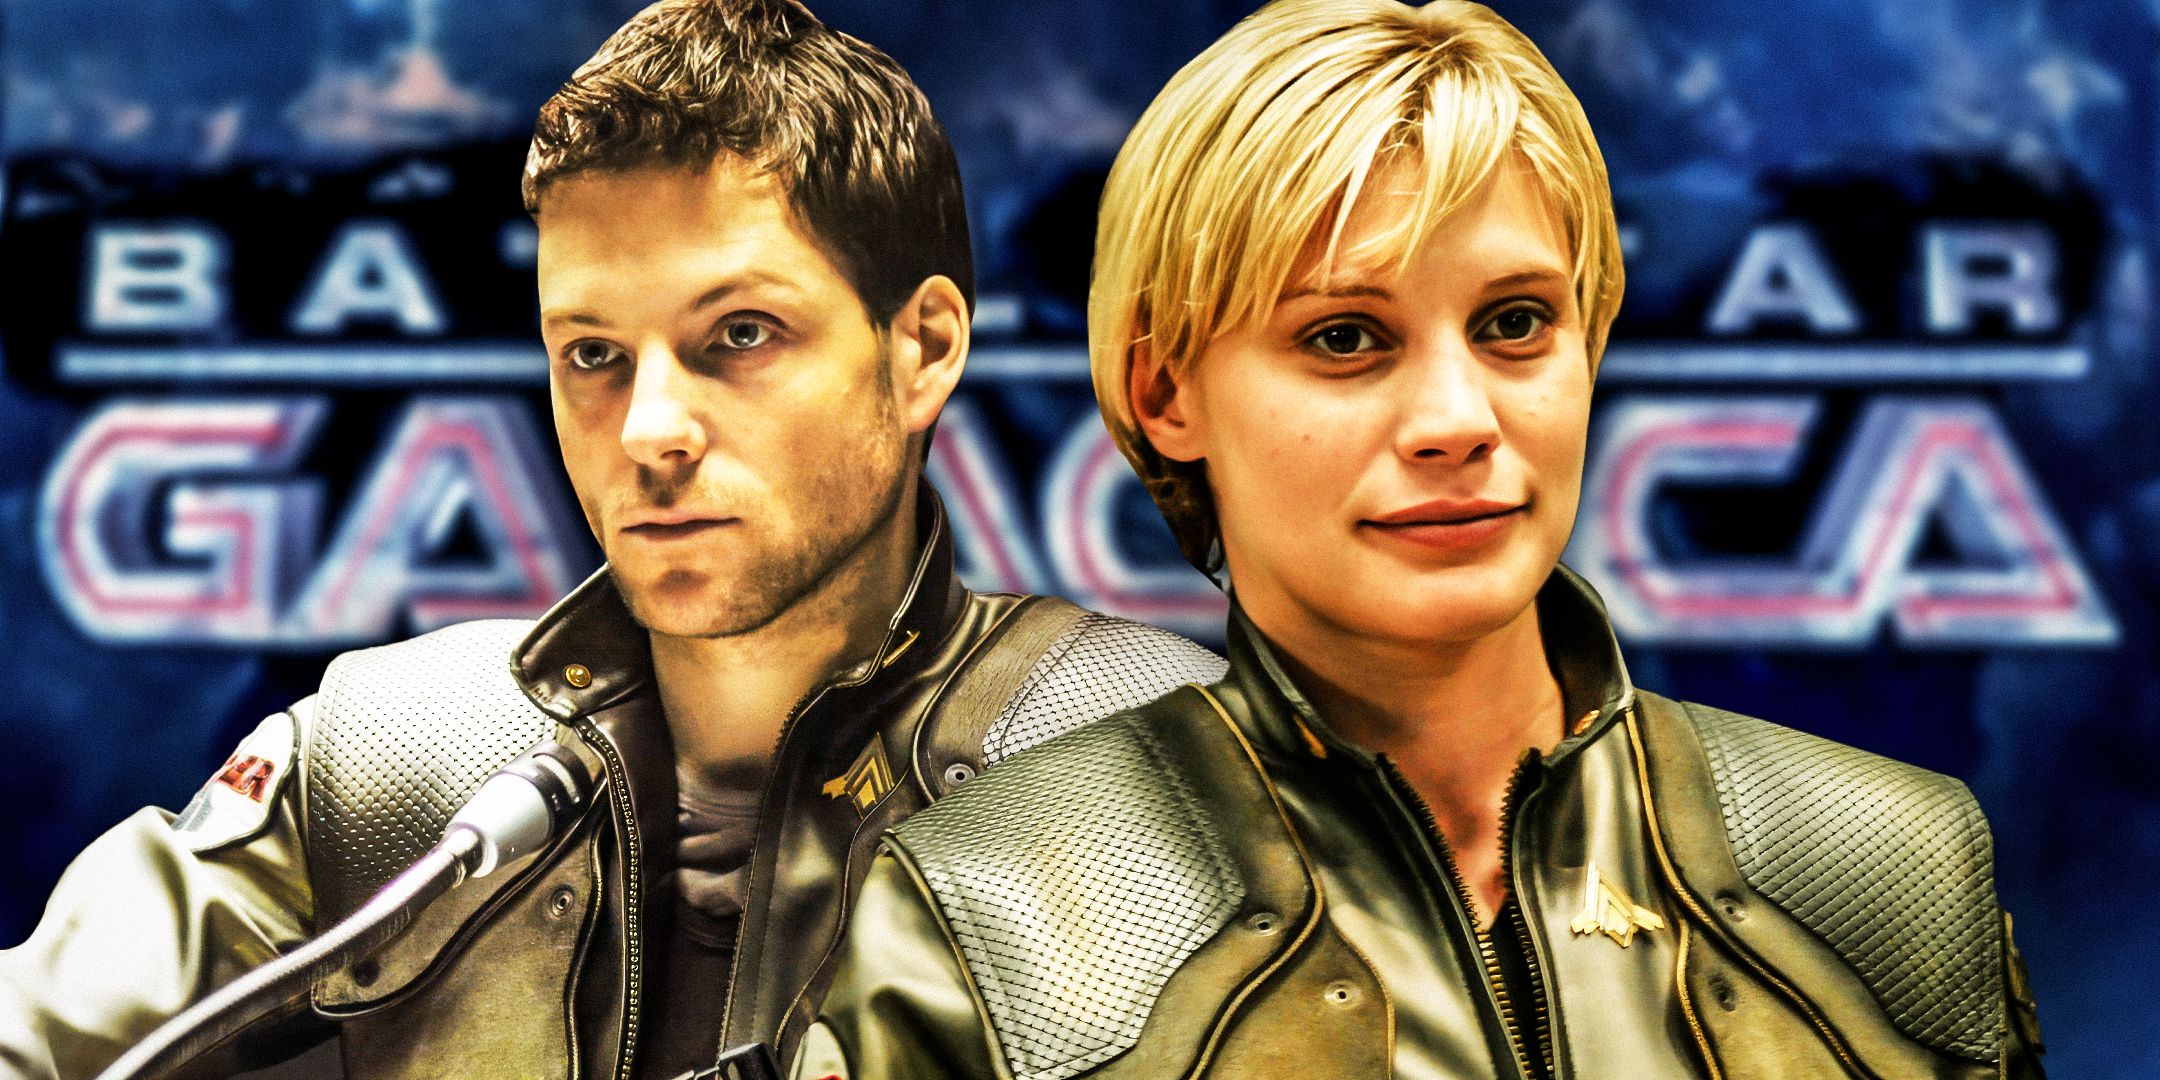 Apollo (Jamie Bamber) and Starbuck (Katee Sackhoff) in front of Battlestar Galactica logo